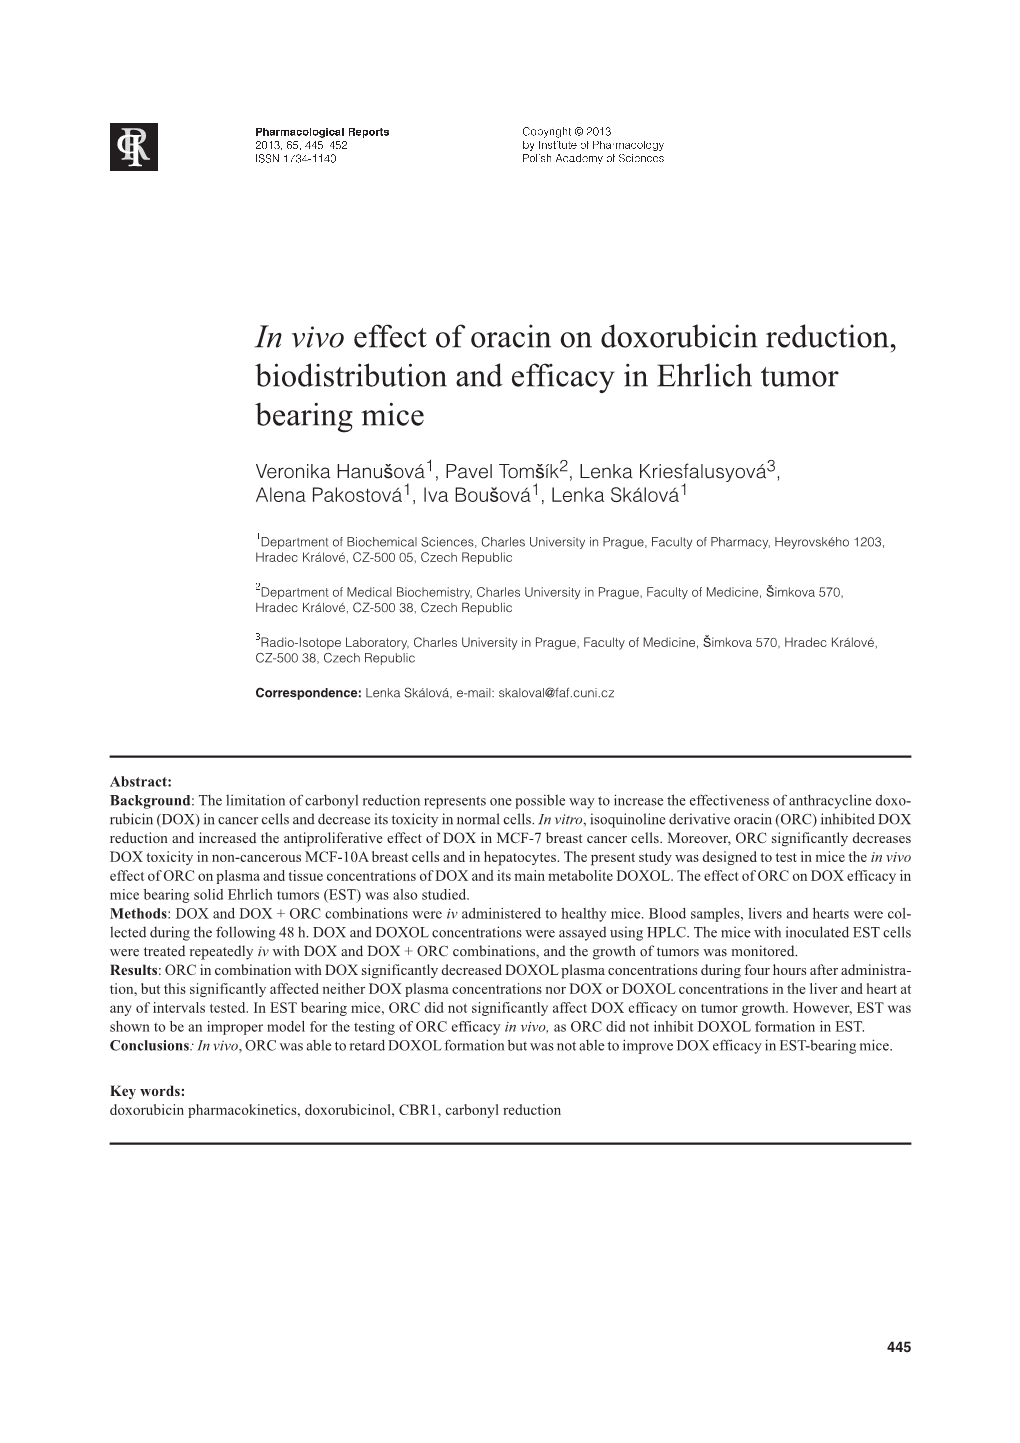 In Vivo Effect of Oracin on Doxorubicin Reduction, Biodistribution and Efficacy in Ehrlich Tumor Bearing Mice